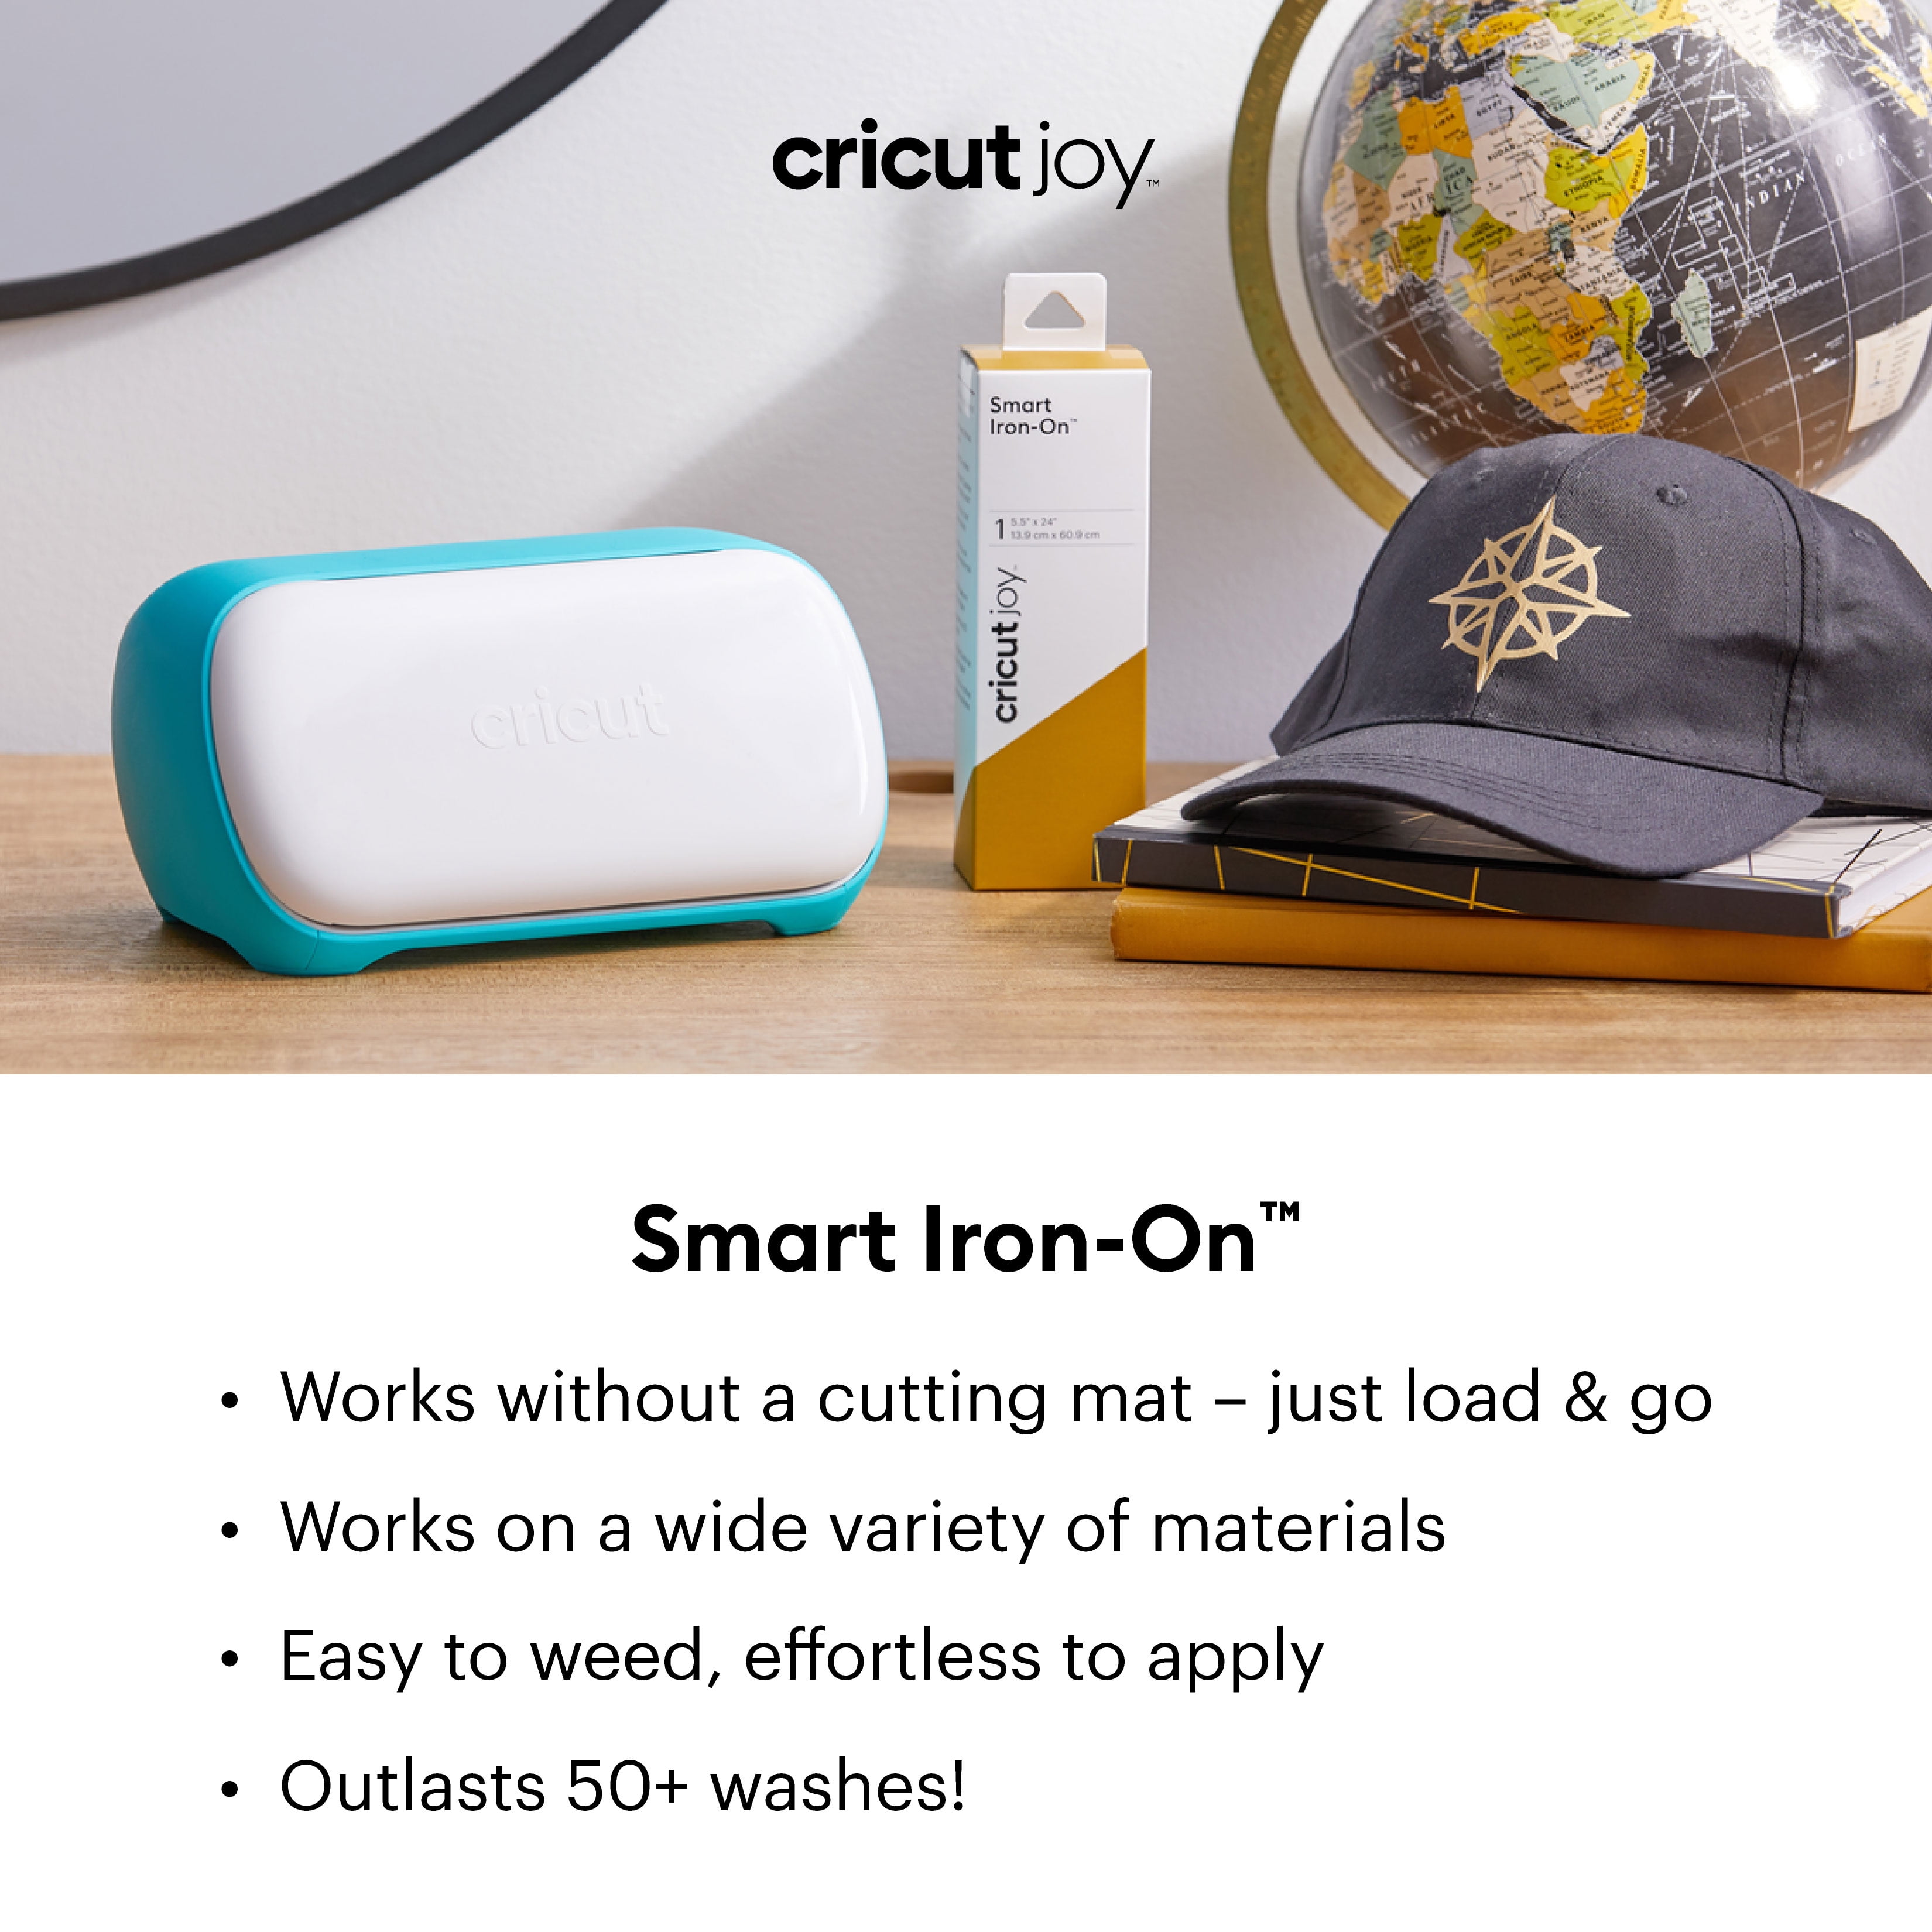 Cricut Joy Everyday Smart Iron-On